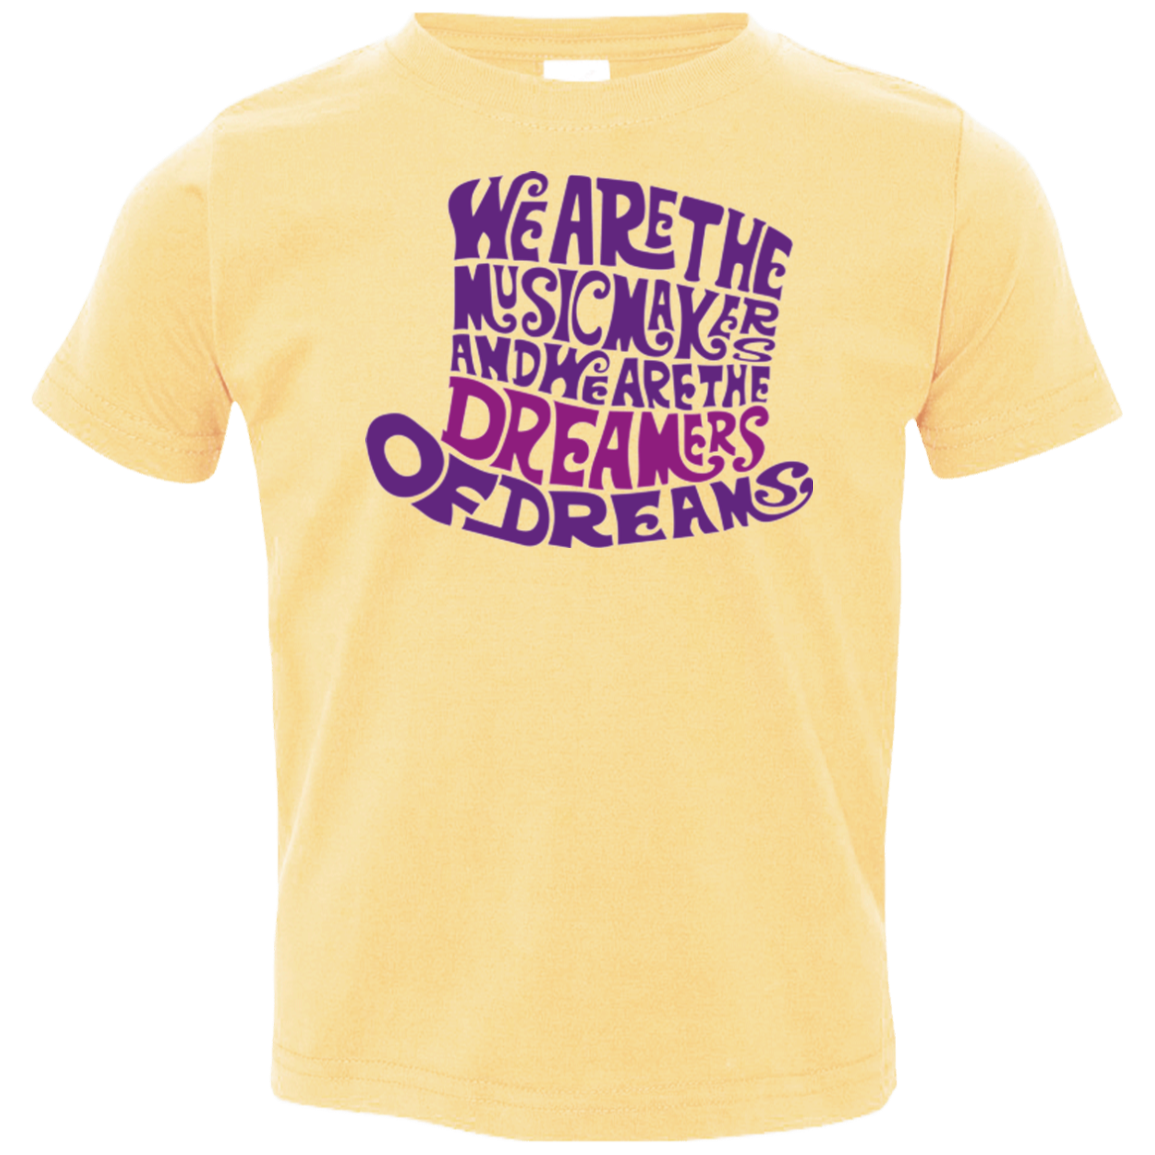 Wonka Purple Toddler Premium T-Shirt